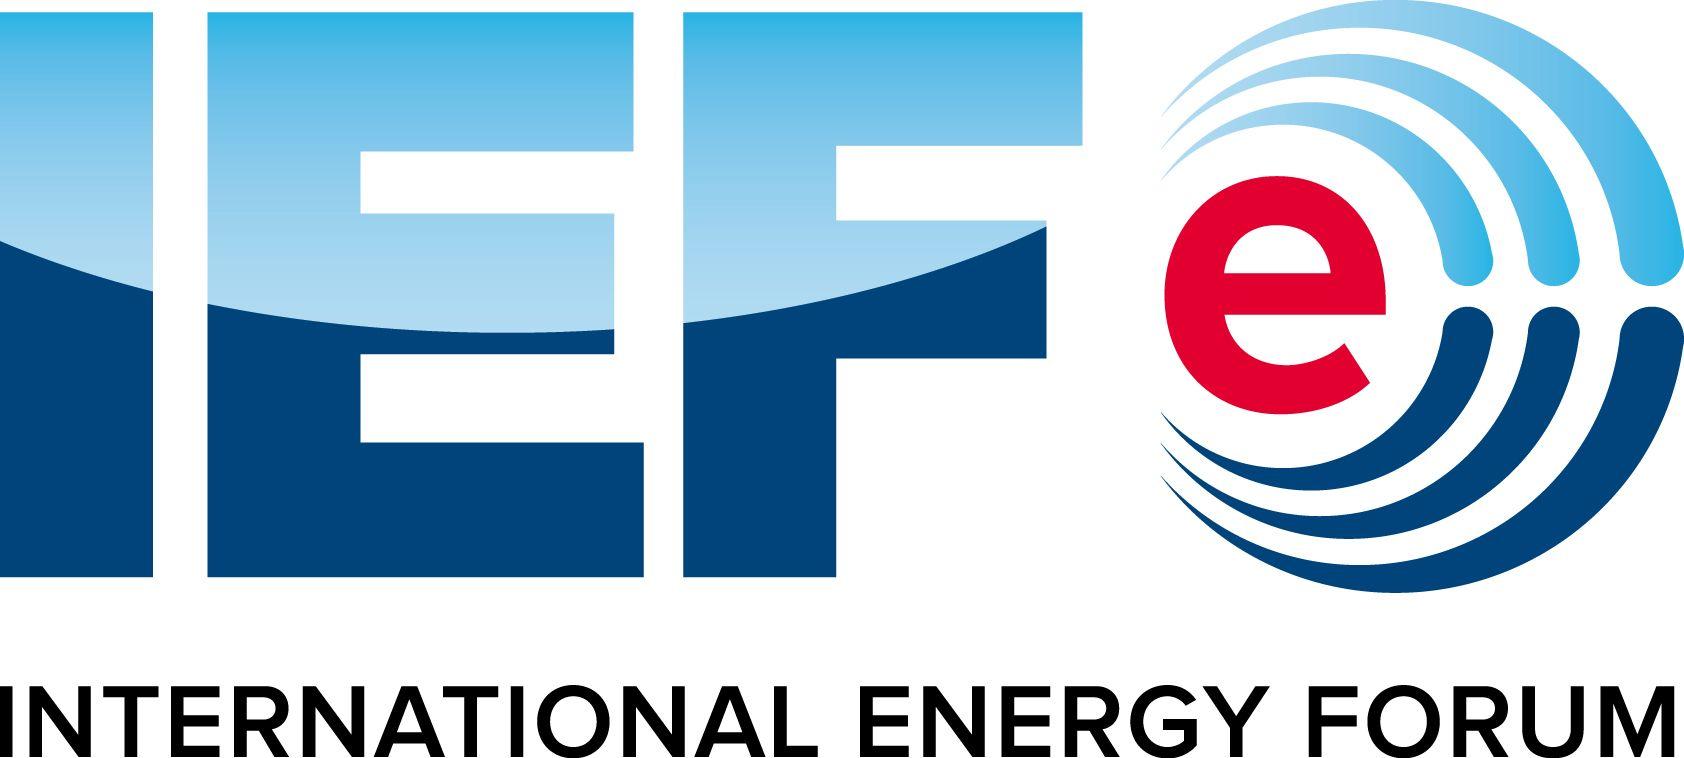 Forum Logo - International Energy Forum Logos and Brand Guidelines | IEF